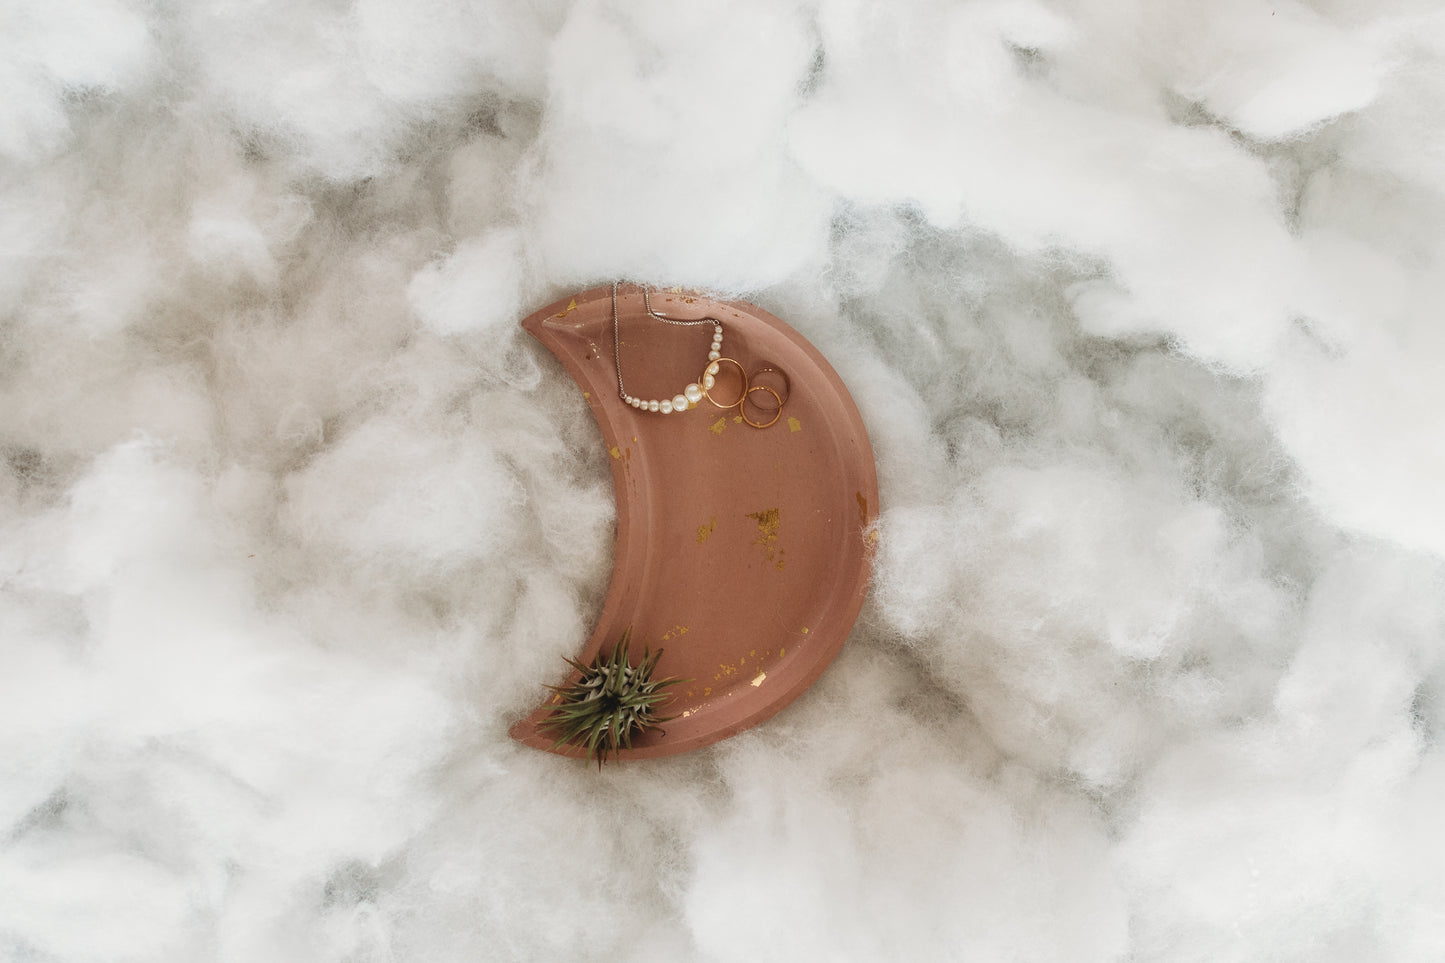 Handmade Moon Dish | Concrete Coaster | Lunar Trinket Tray